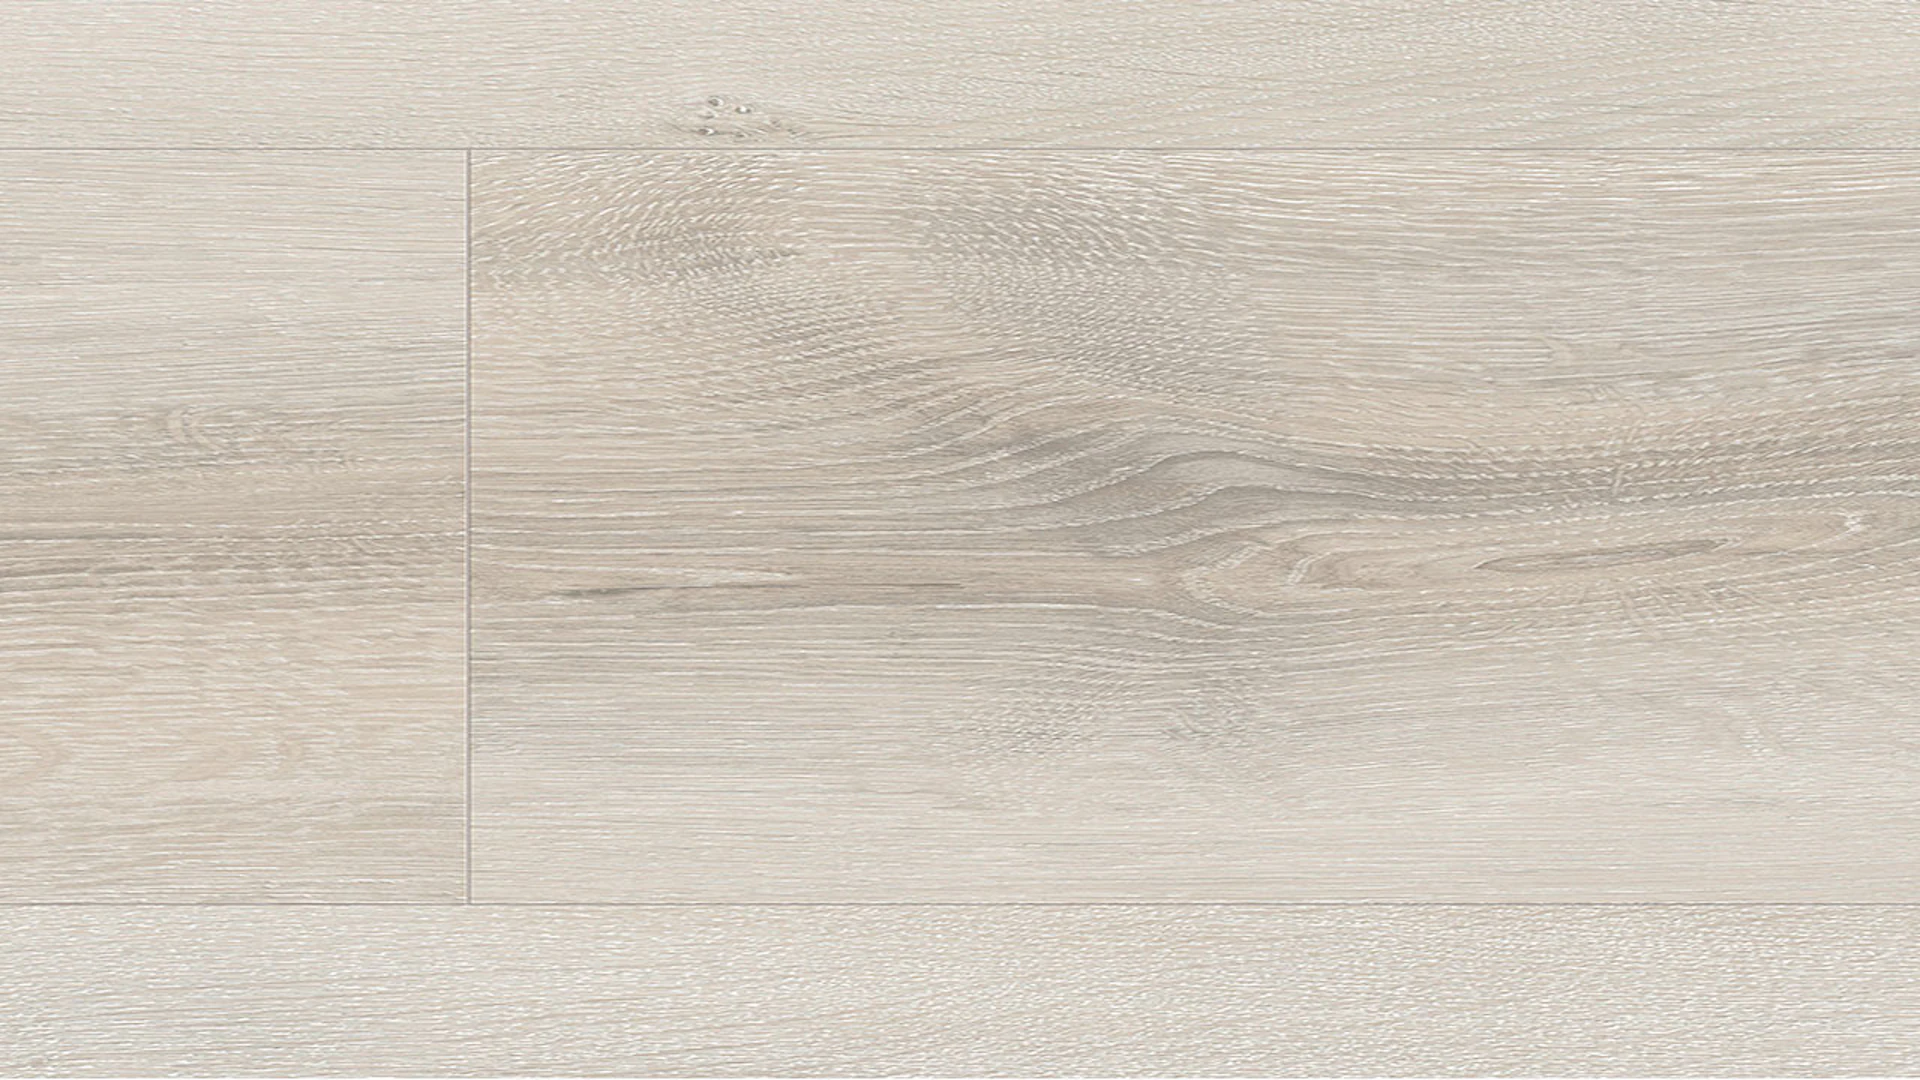 Parador Laminate Flooring - Basic 600 wide wideplank Askada oak plank white limed mini bevel